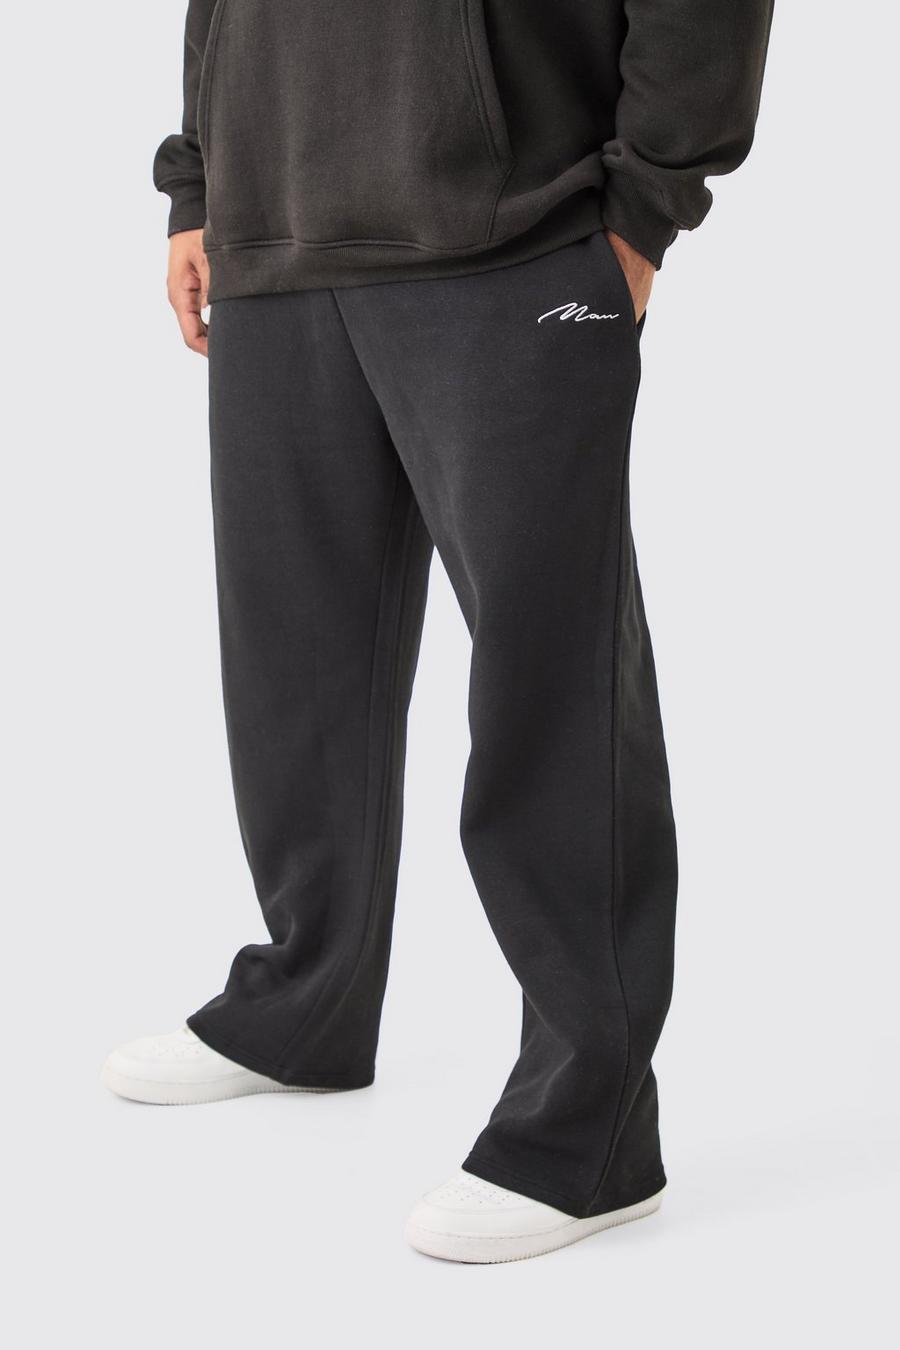 Pantalón deportivo Plus holgado negro con firma MAN, Black